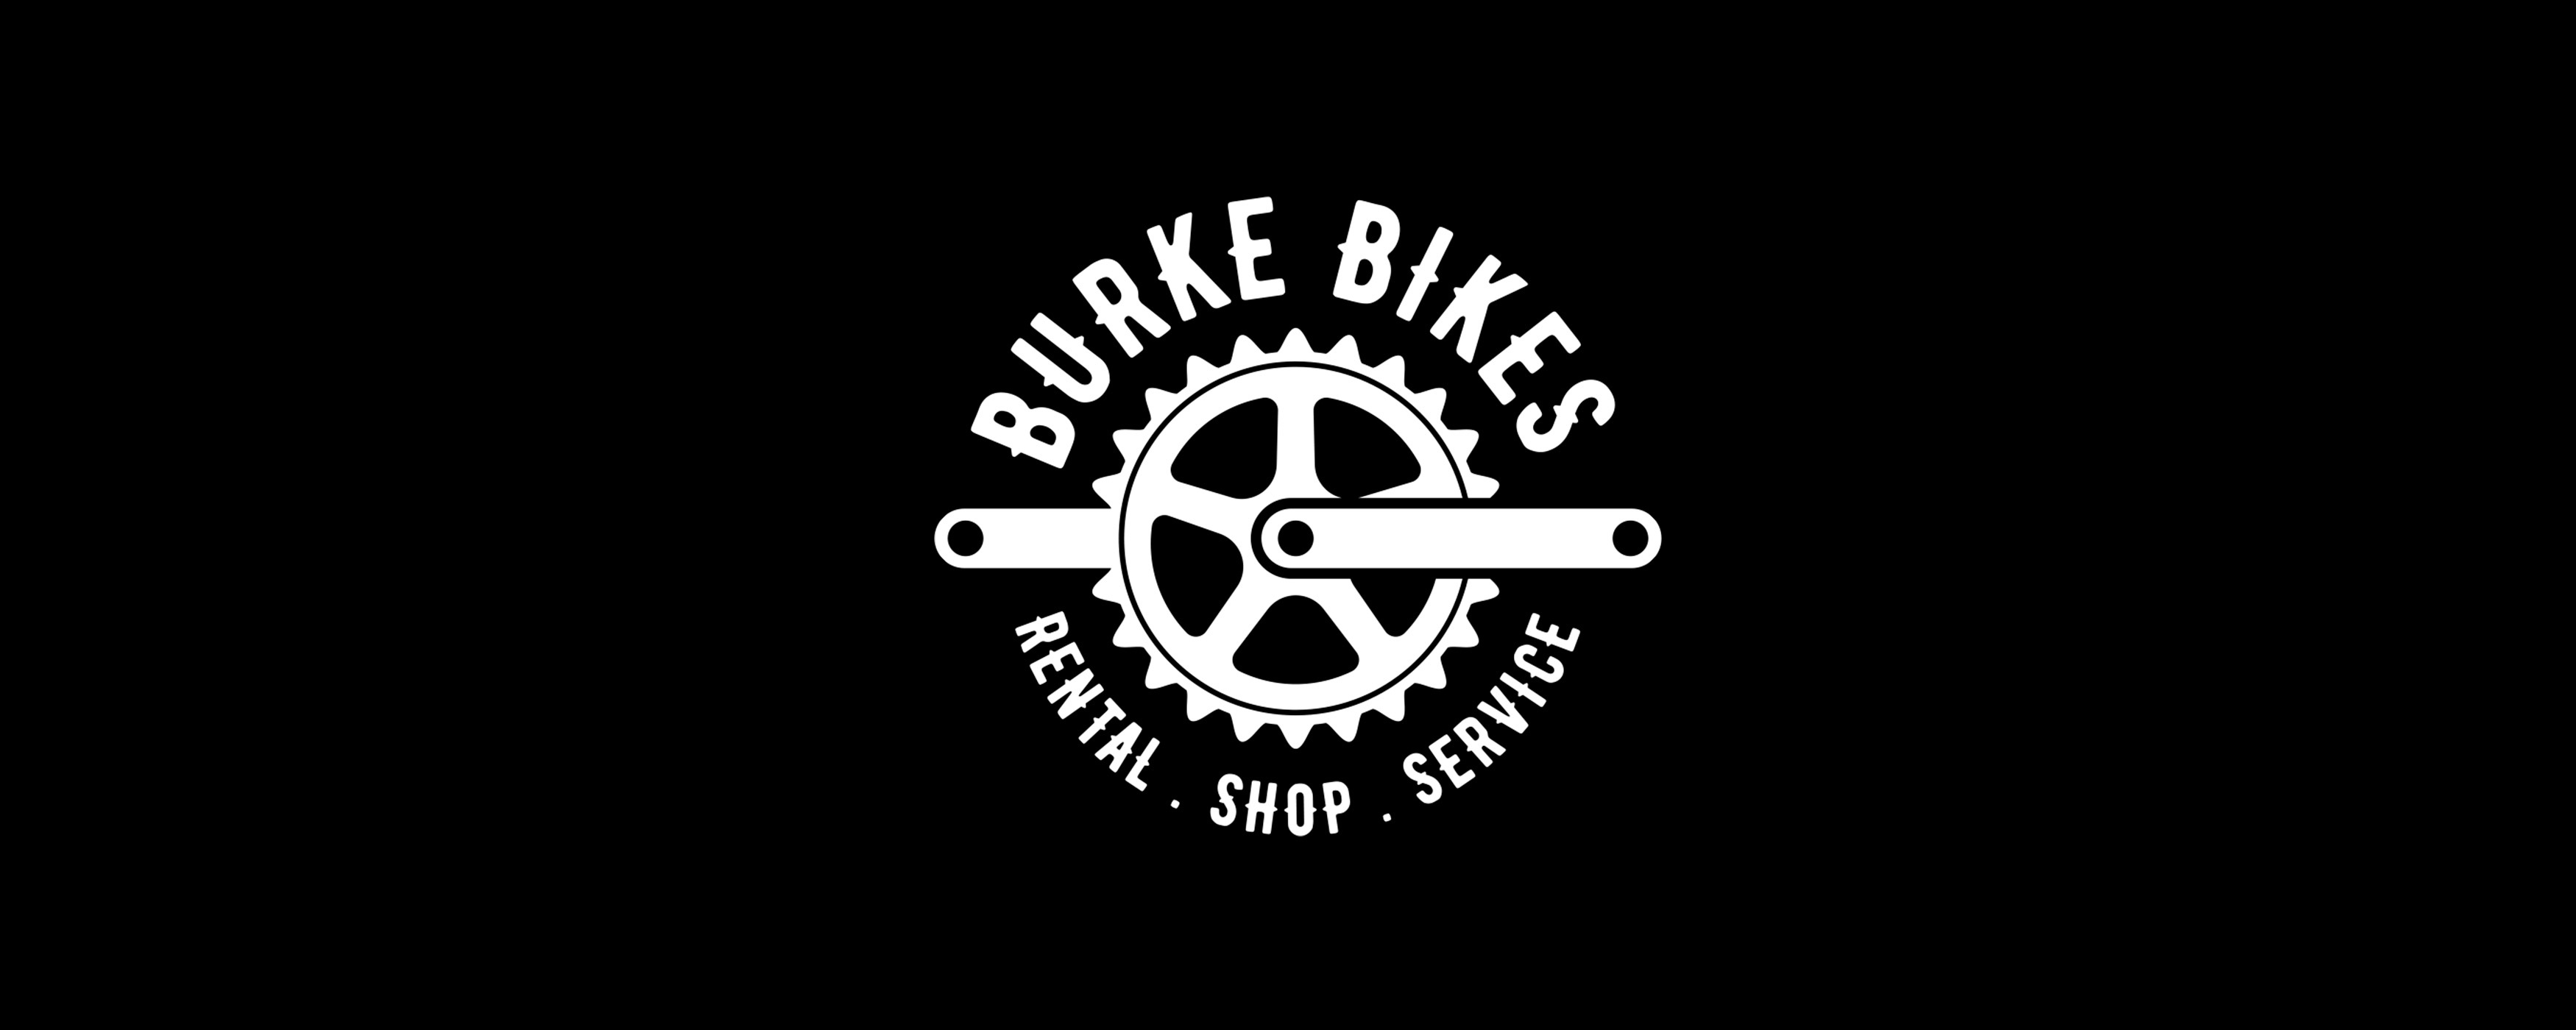 Burke Bikes